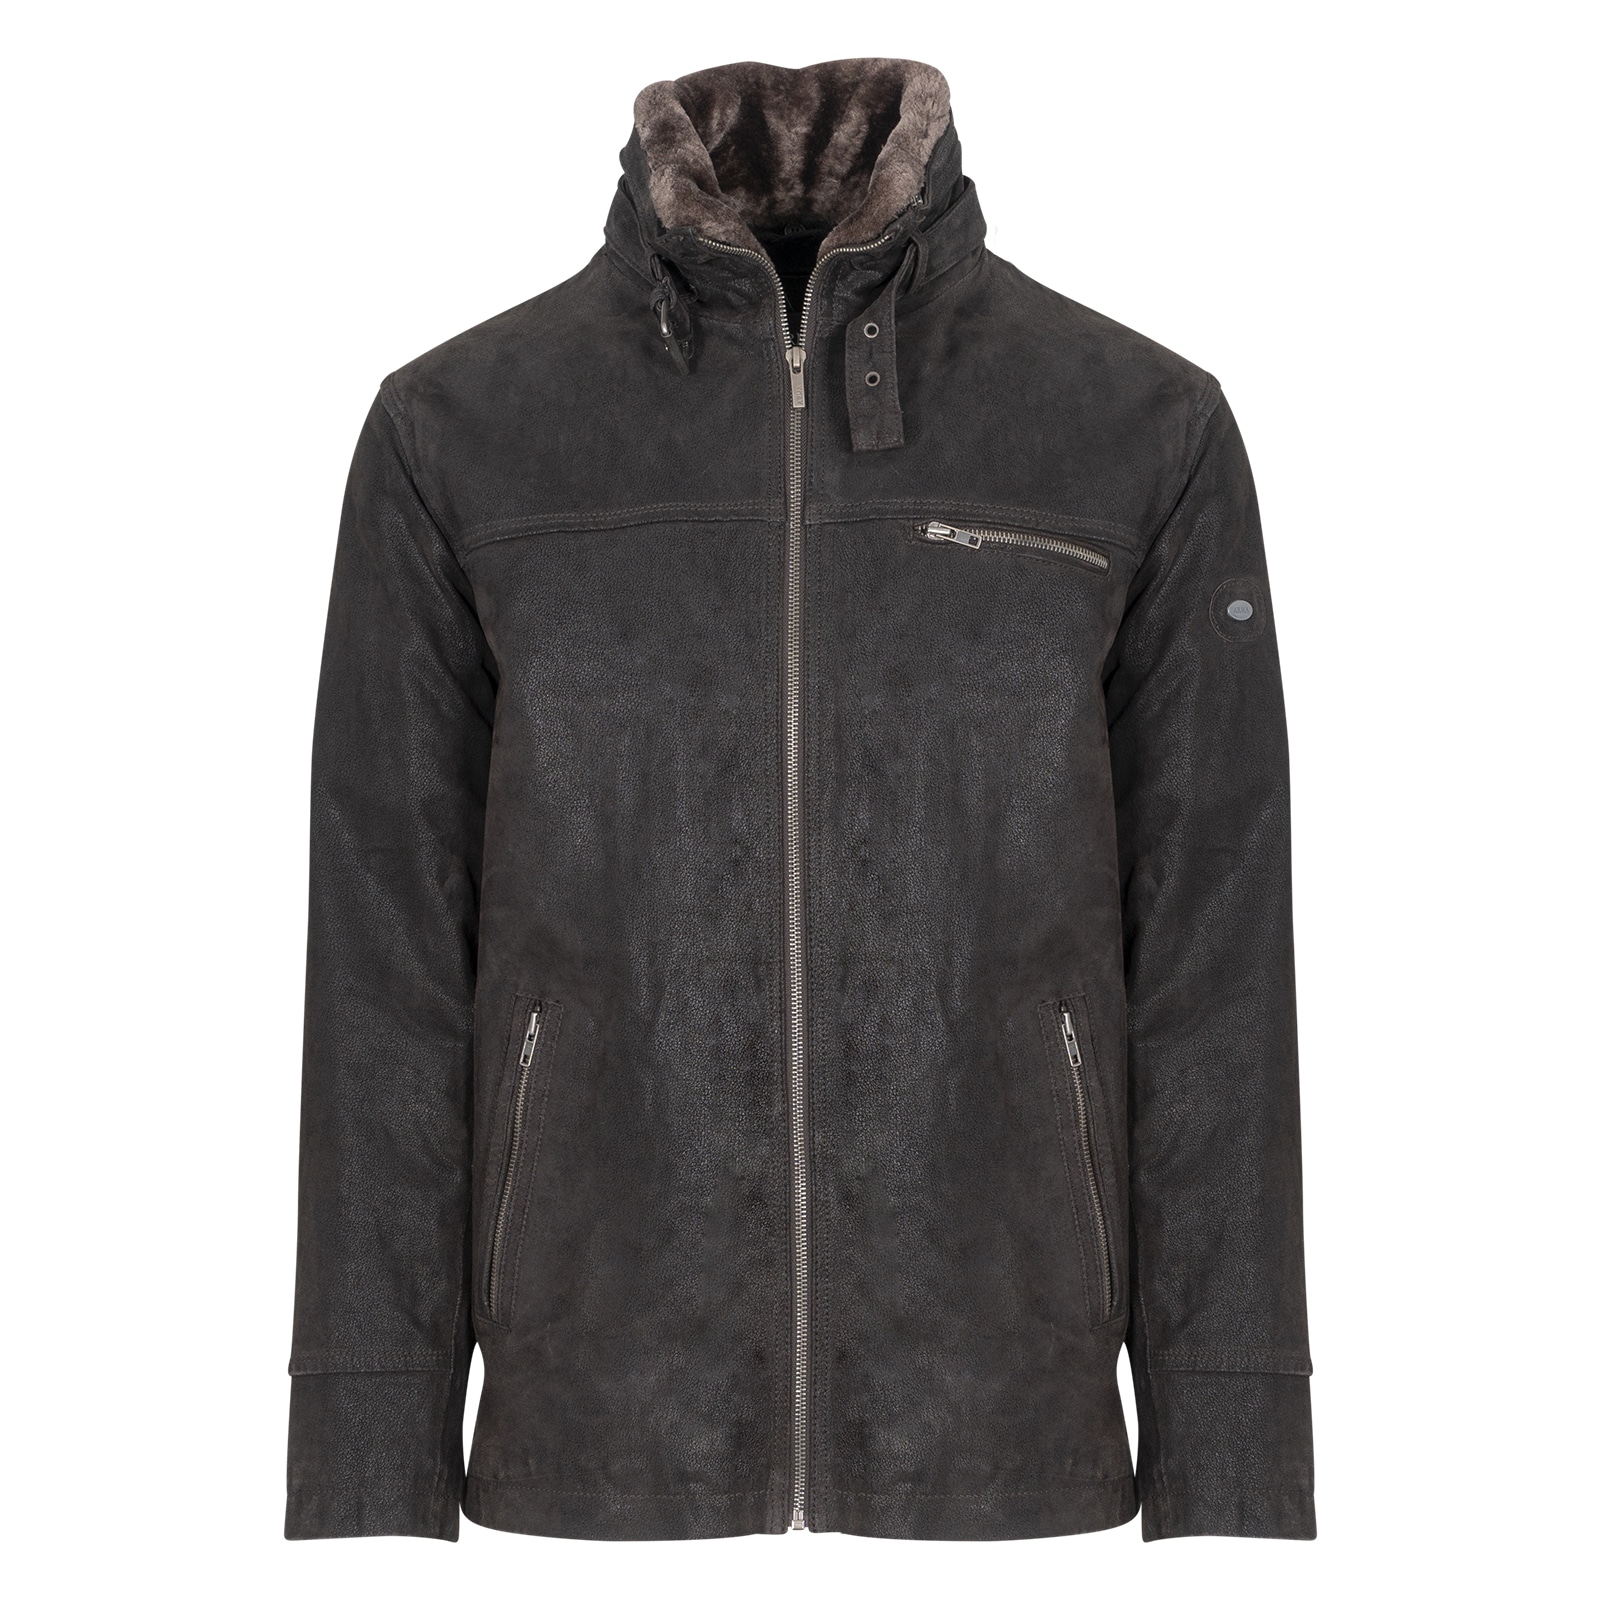 Prince Oliver Δερμάτινο Κηρωμένο Καφέ Σκούρο 100% Leather Jacket (Comfort Fit) Outlet